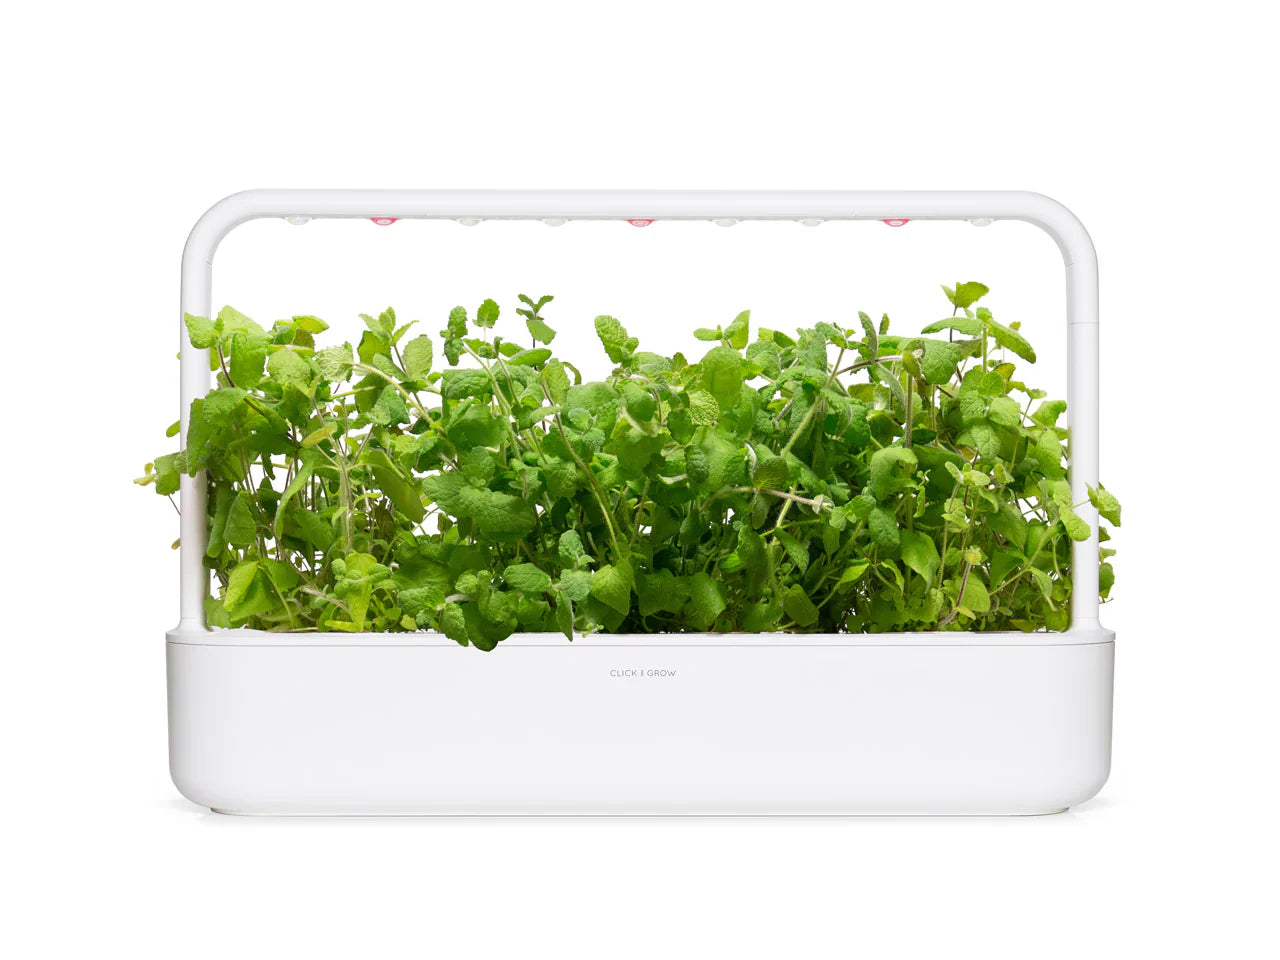 Click & Grow Smart Garden 9 with Apple Mint Growing